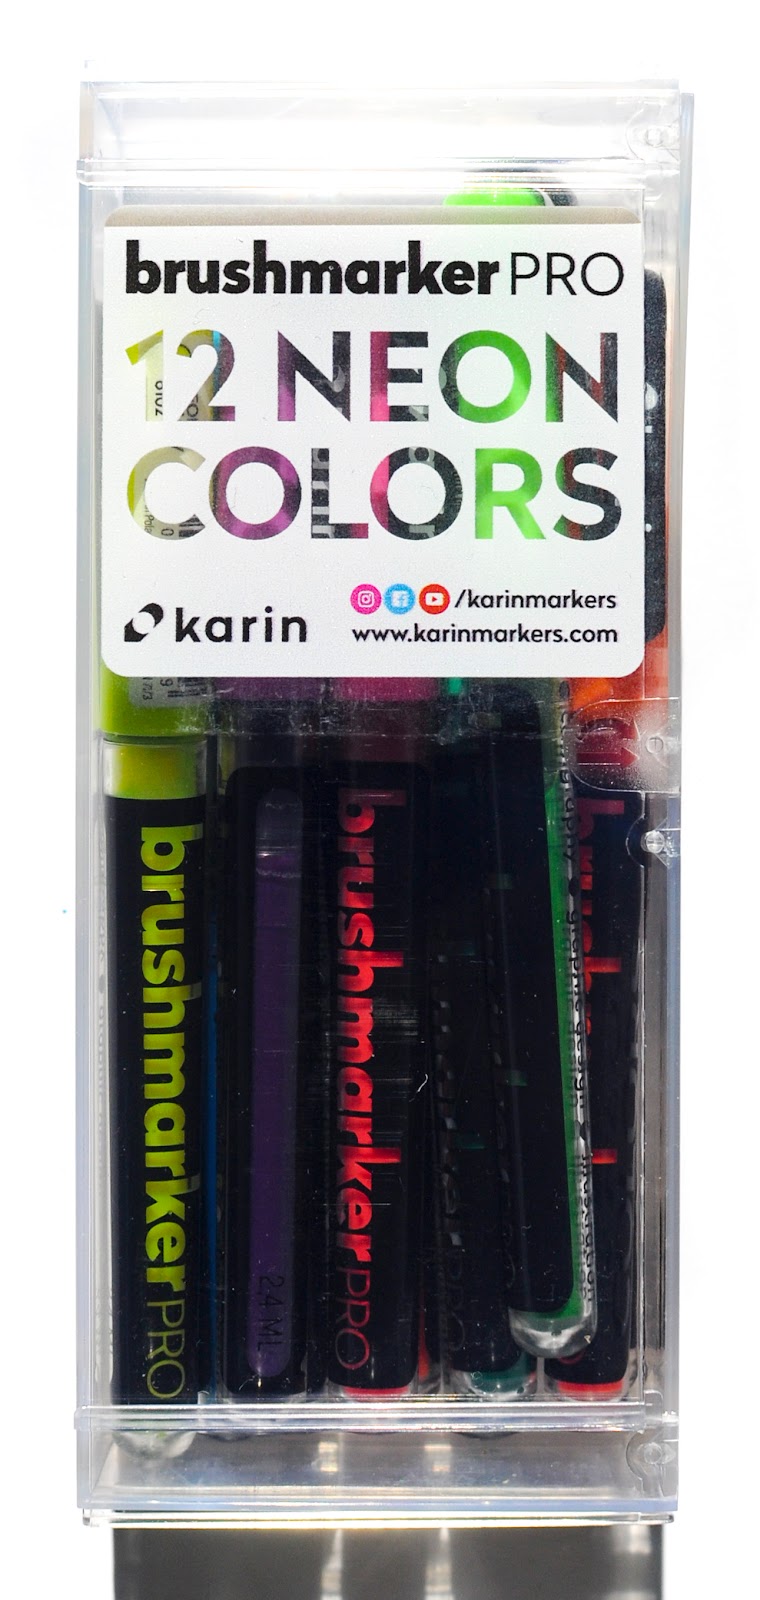 Karin Markers BrushmarkerPRO Neon series,Durable and wear